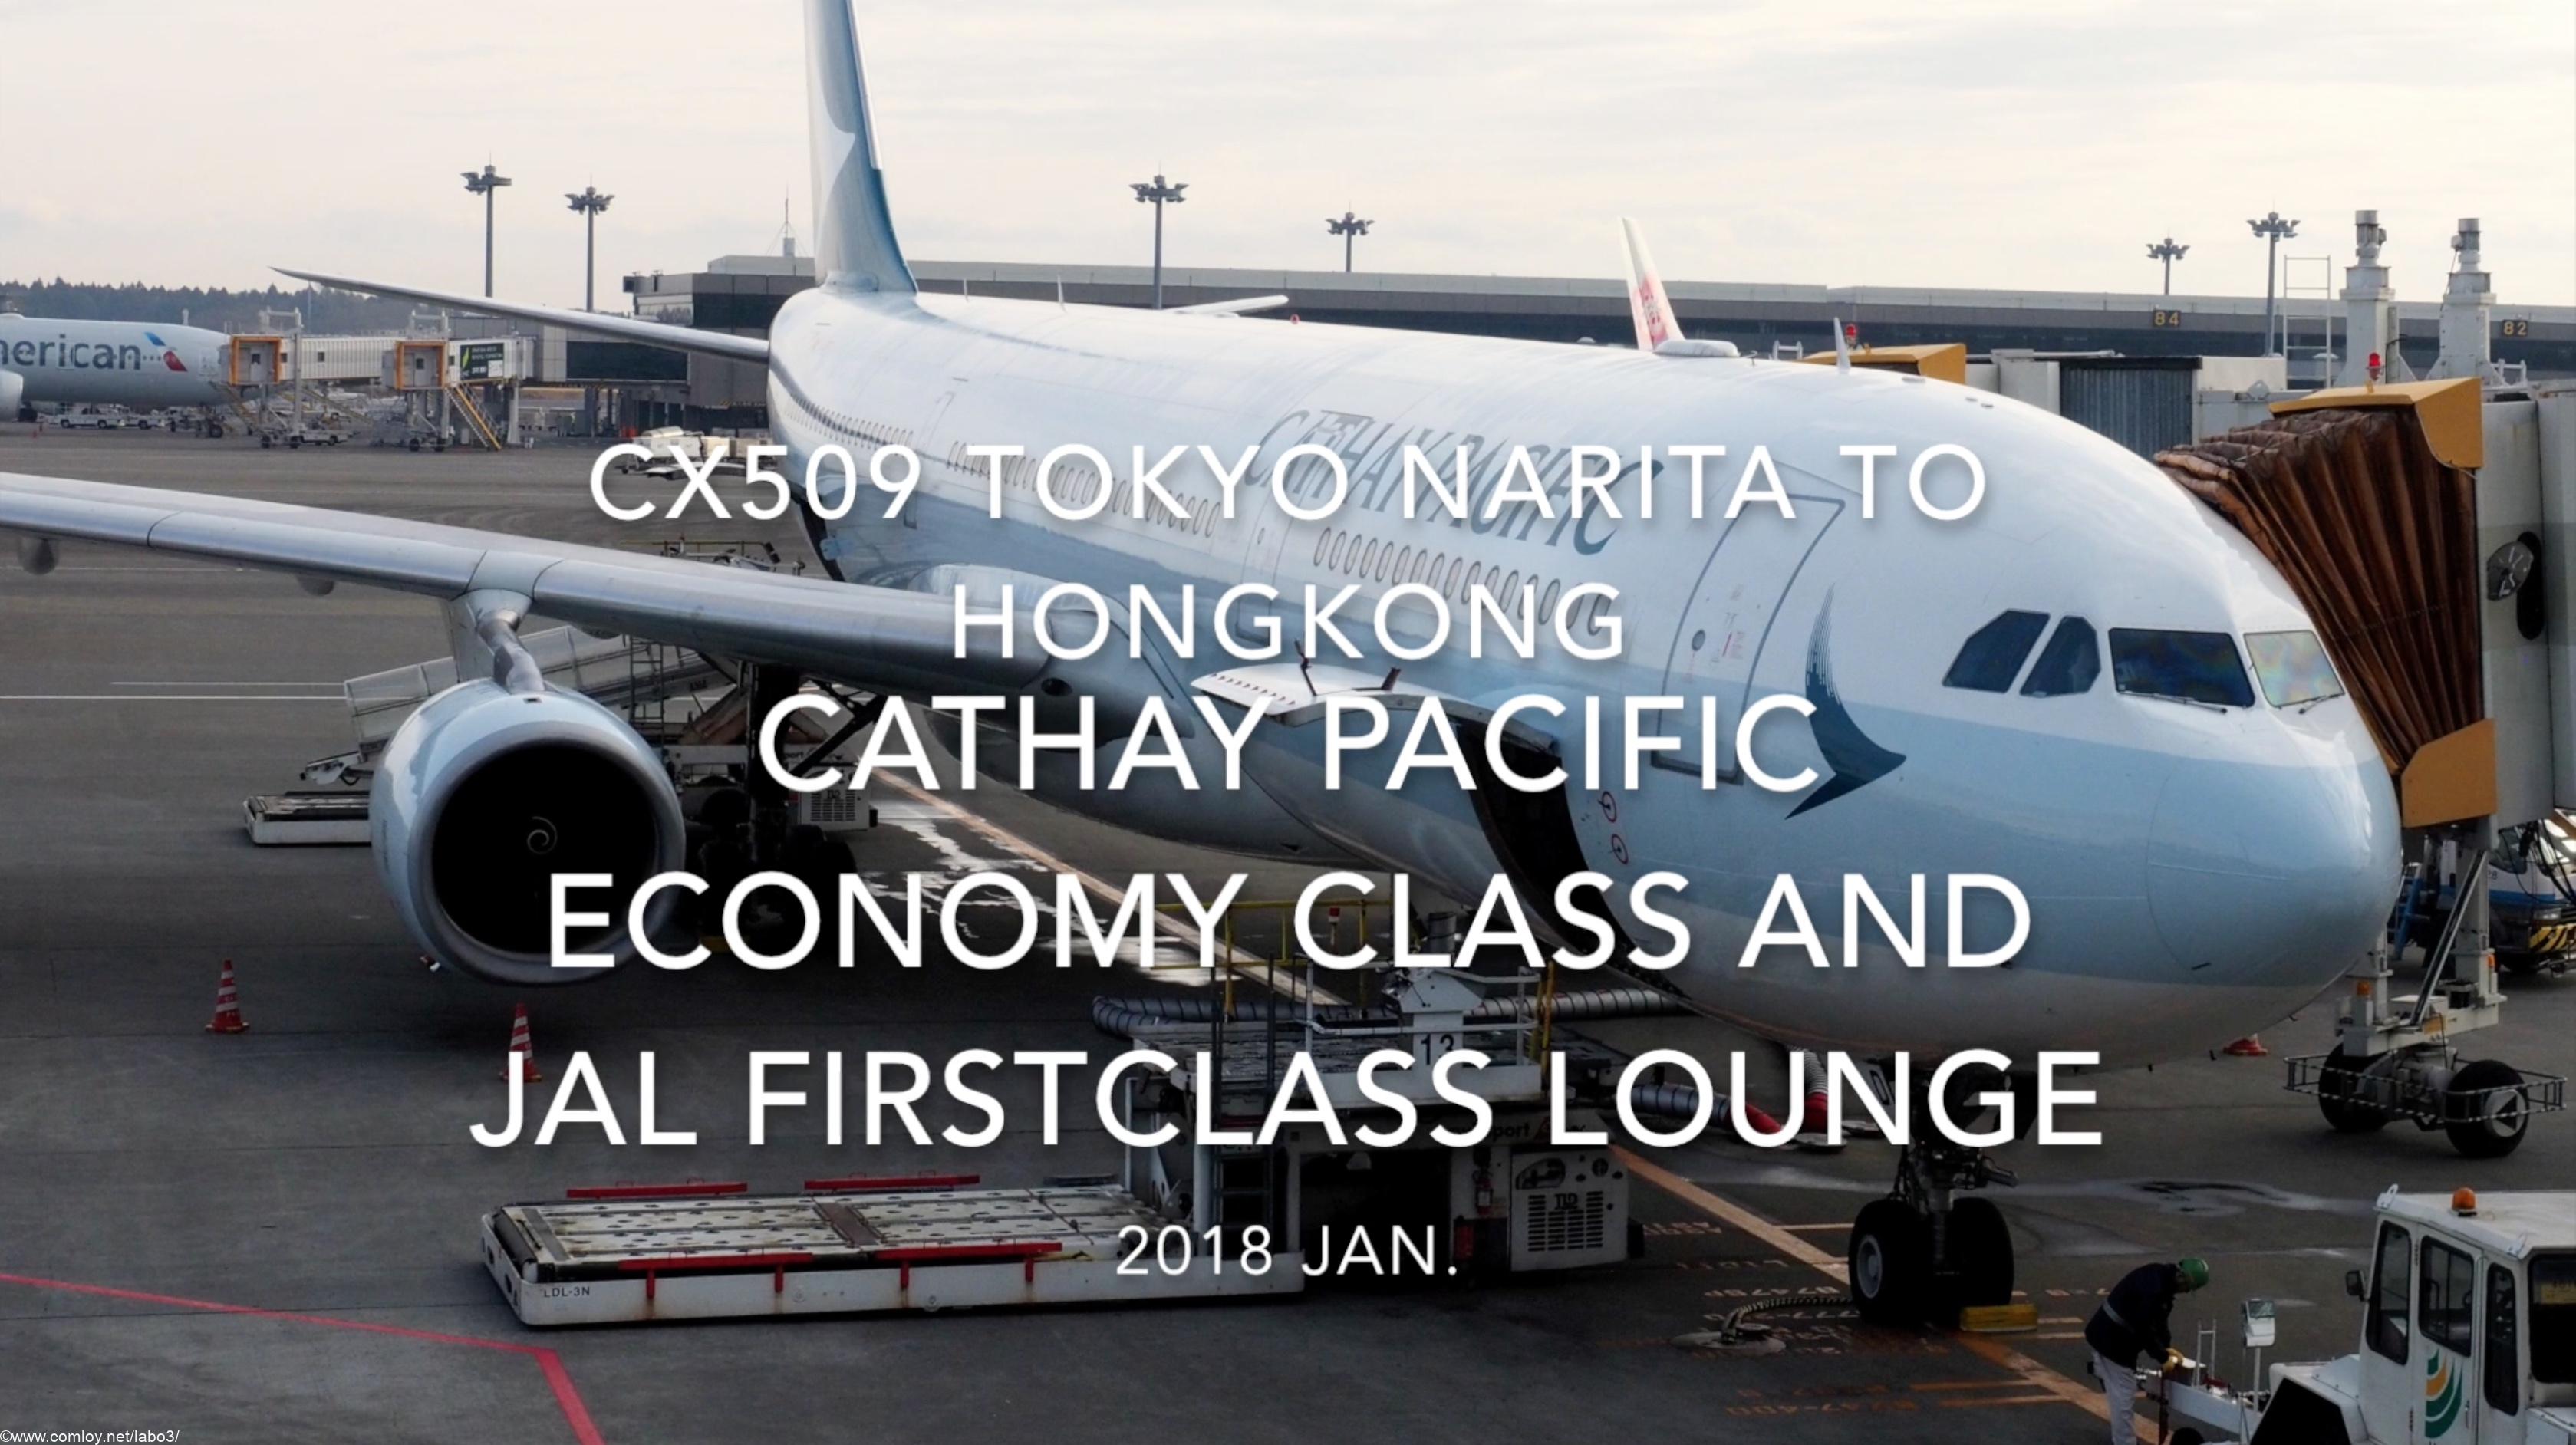 【Flight Report】 CX509 TOKYO NARITA to Hongkong and JAL Firstclass Lounge 2018・1 キャセイパシフィック 成田 - 香港 エコノミークラス搭乗記, JAL ファーストクラスラウンジ